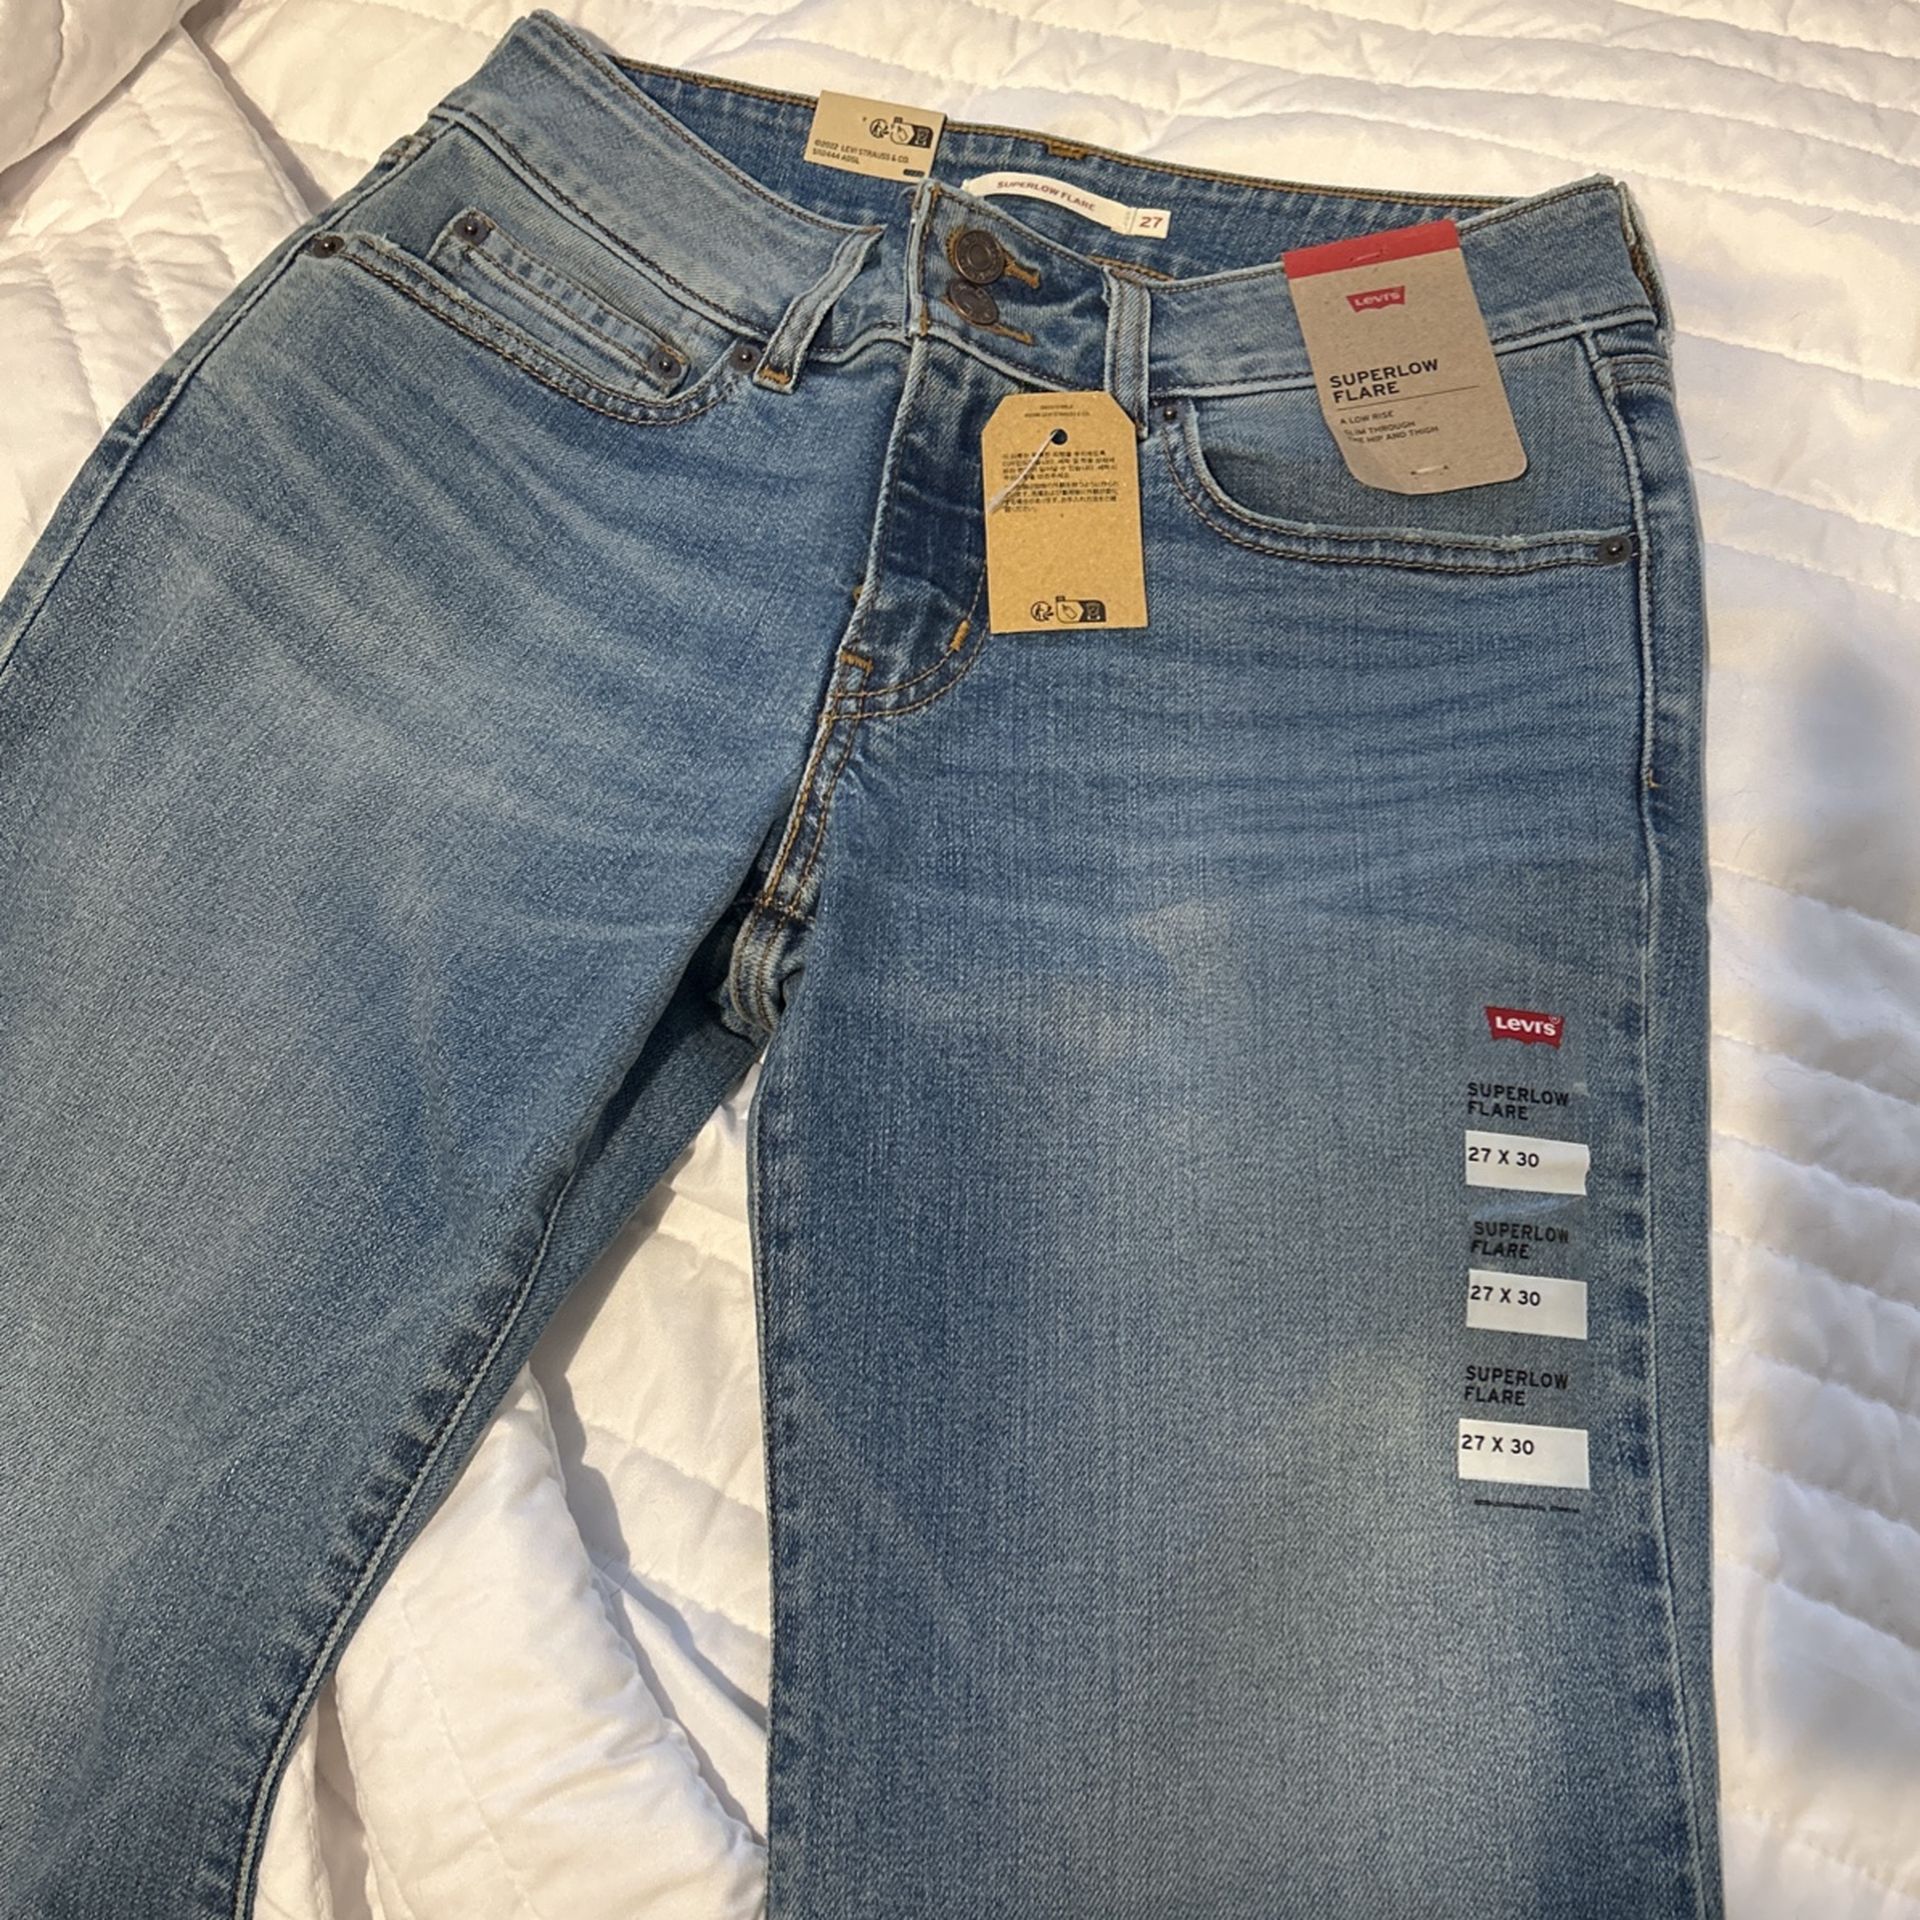 Brand New 27x30 Levi’s Women’s Jeans